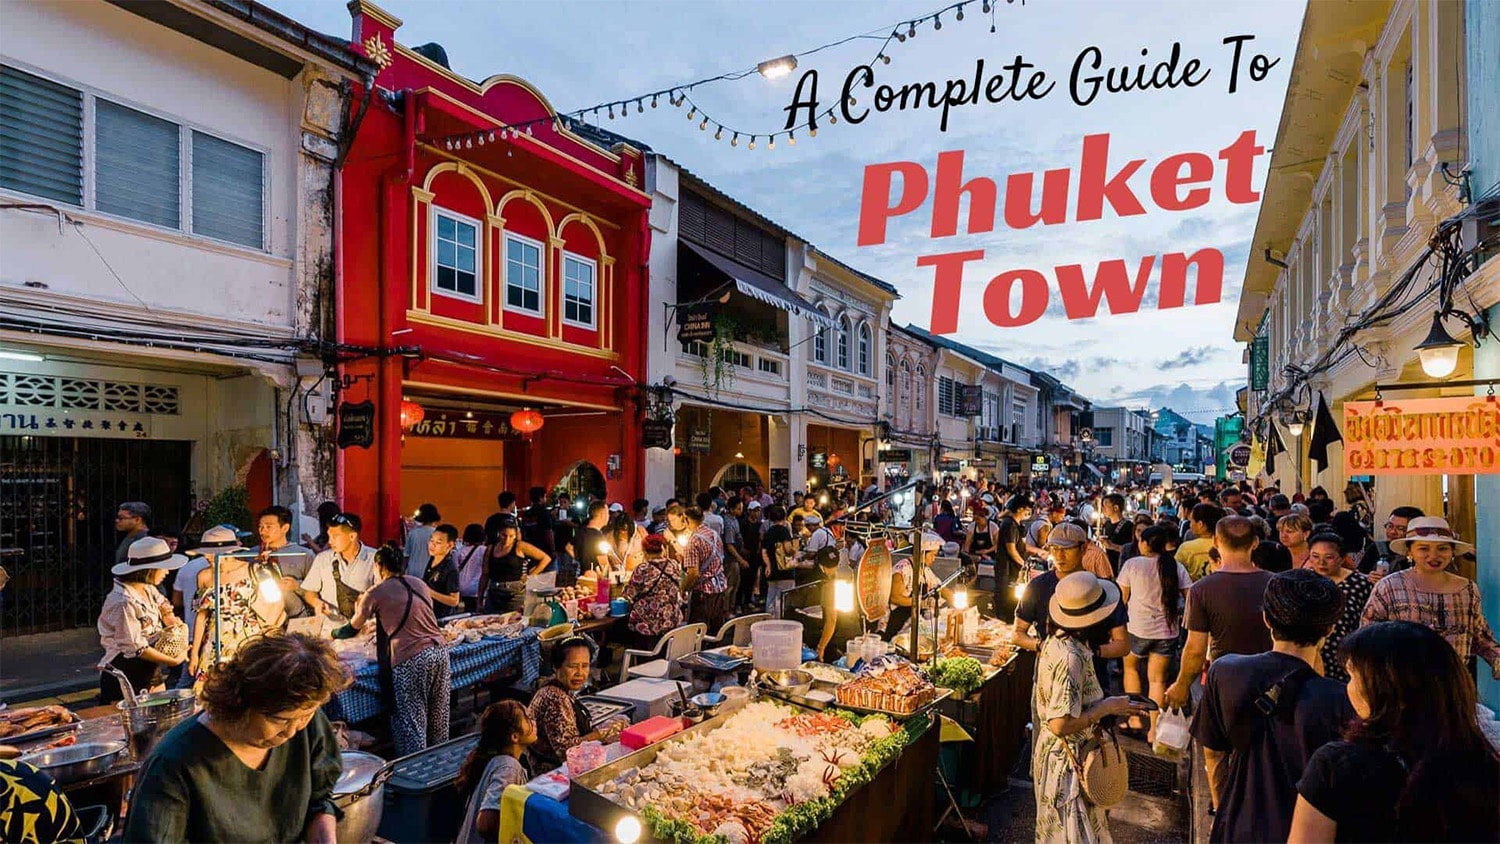 35 interesting facts about Phuket